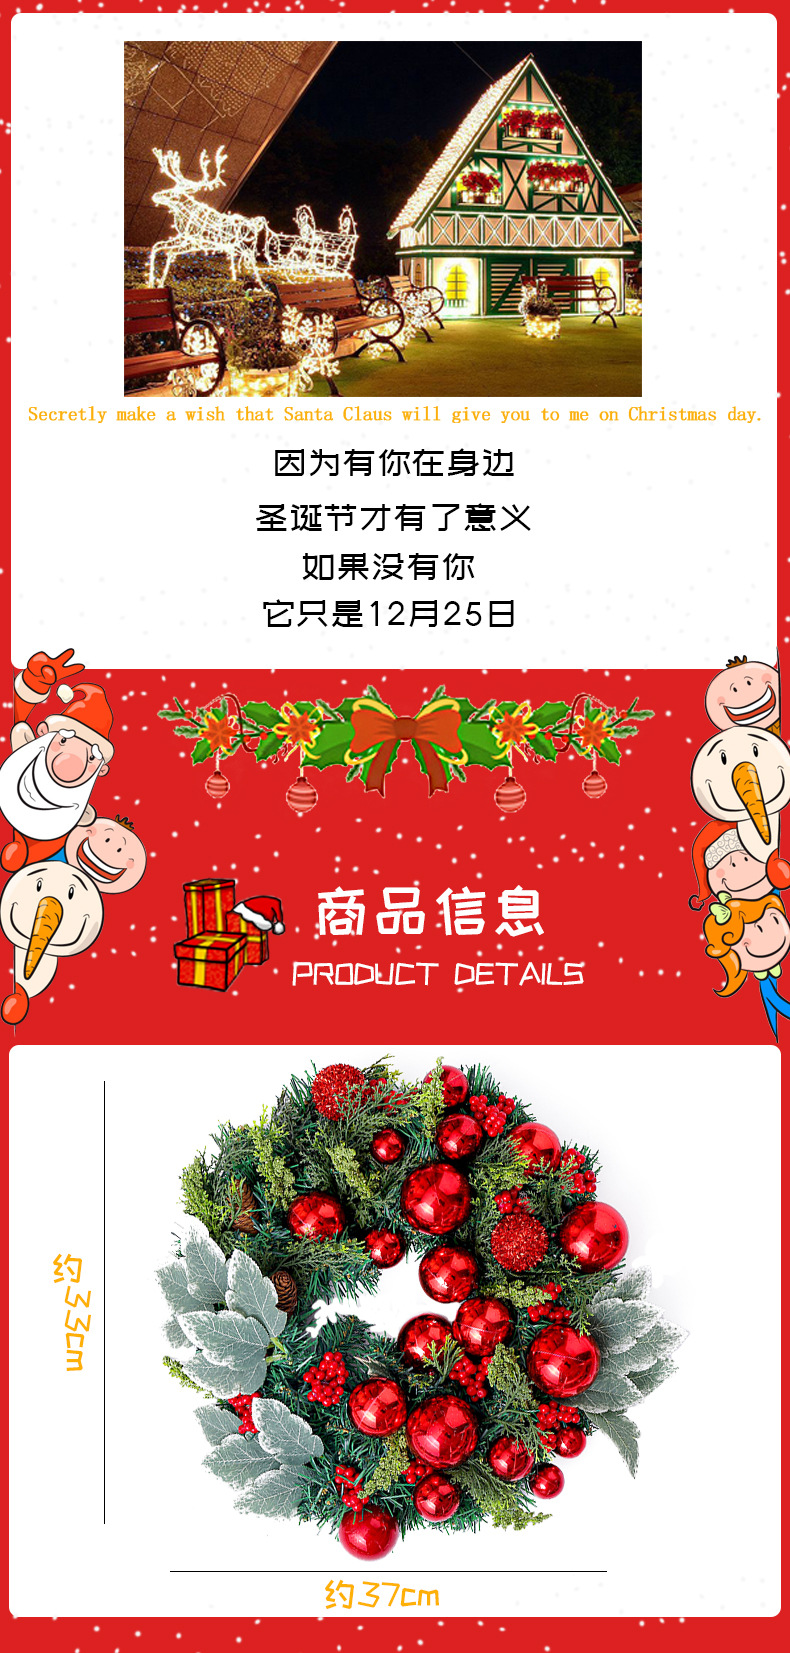 Hong Kong Love Cross-border Christmas Ball Christmas Wreath Imitation Rattan Wreath Door Hanging Window Display Decoration Props display picture 1